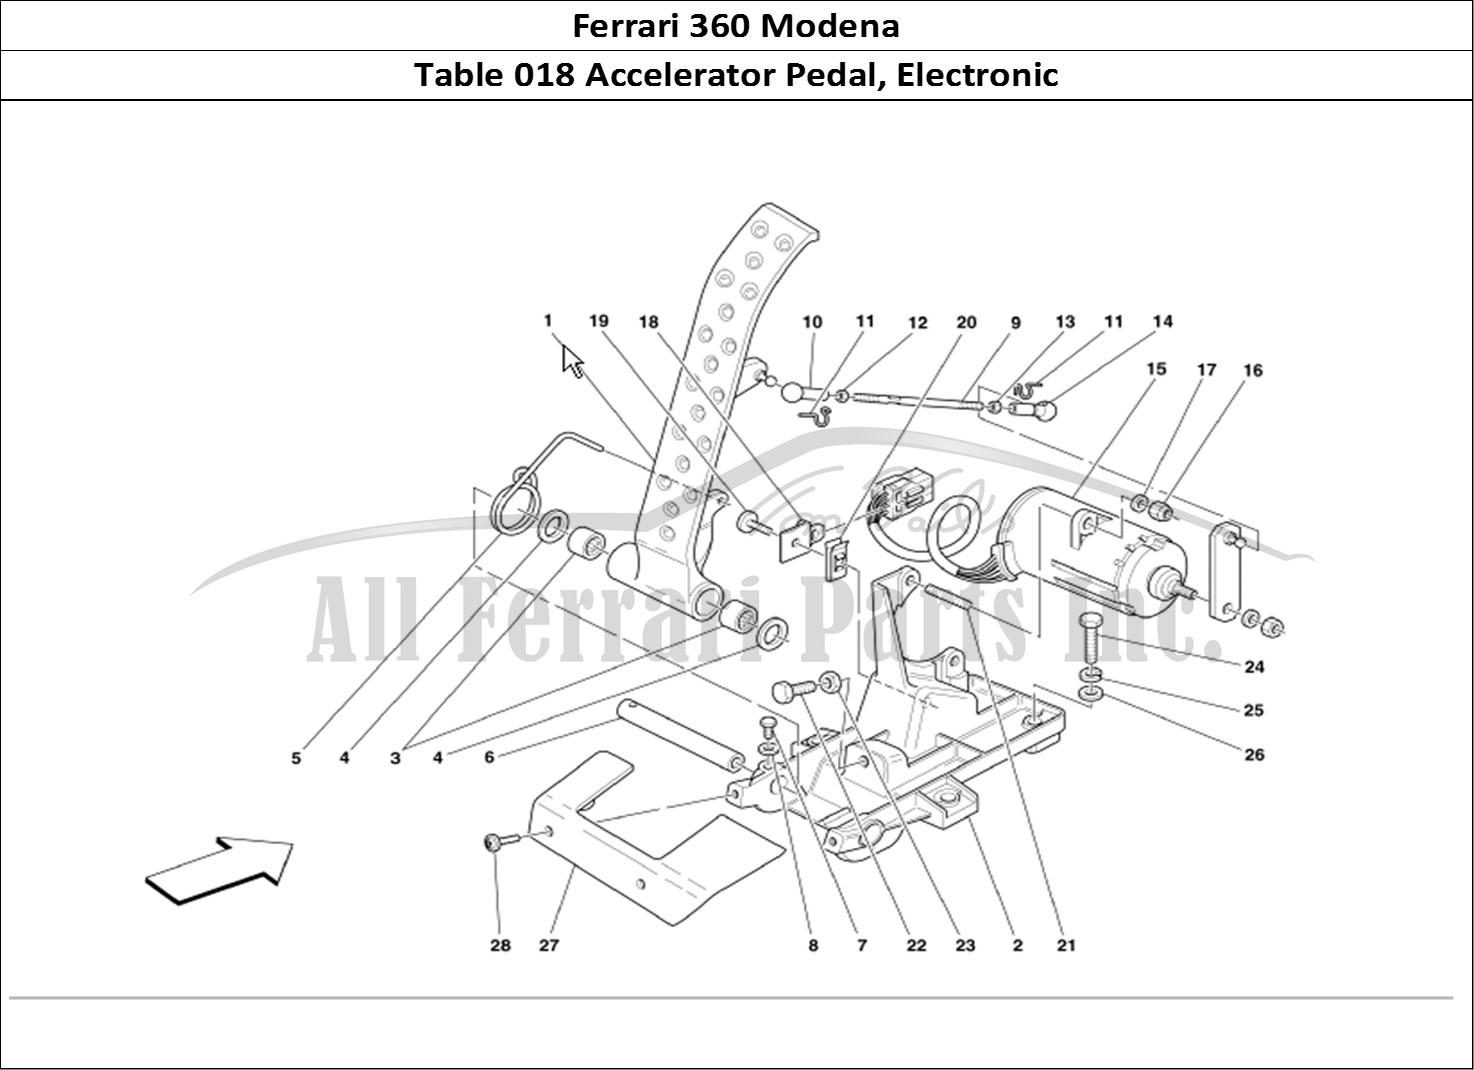 Ferrari Parts Ferrari 360 Modena Page 018 Electronic Accelerator Pe